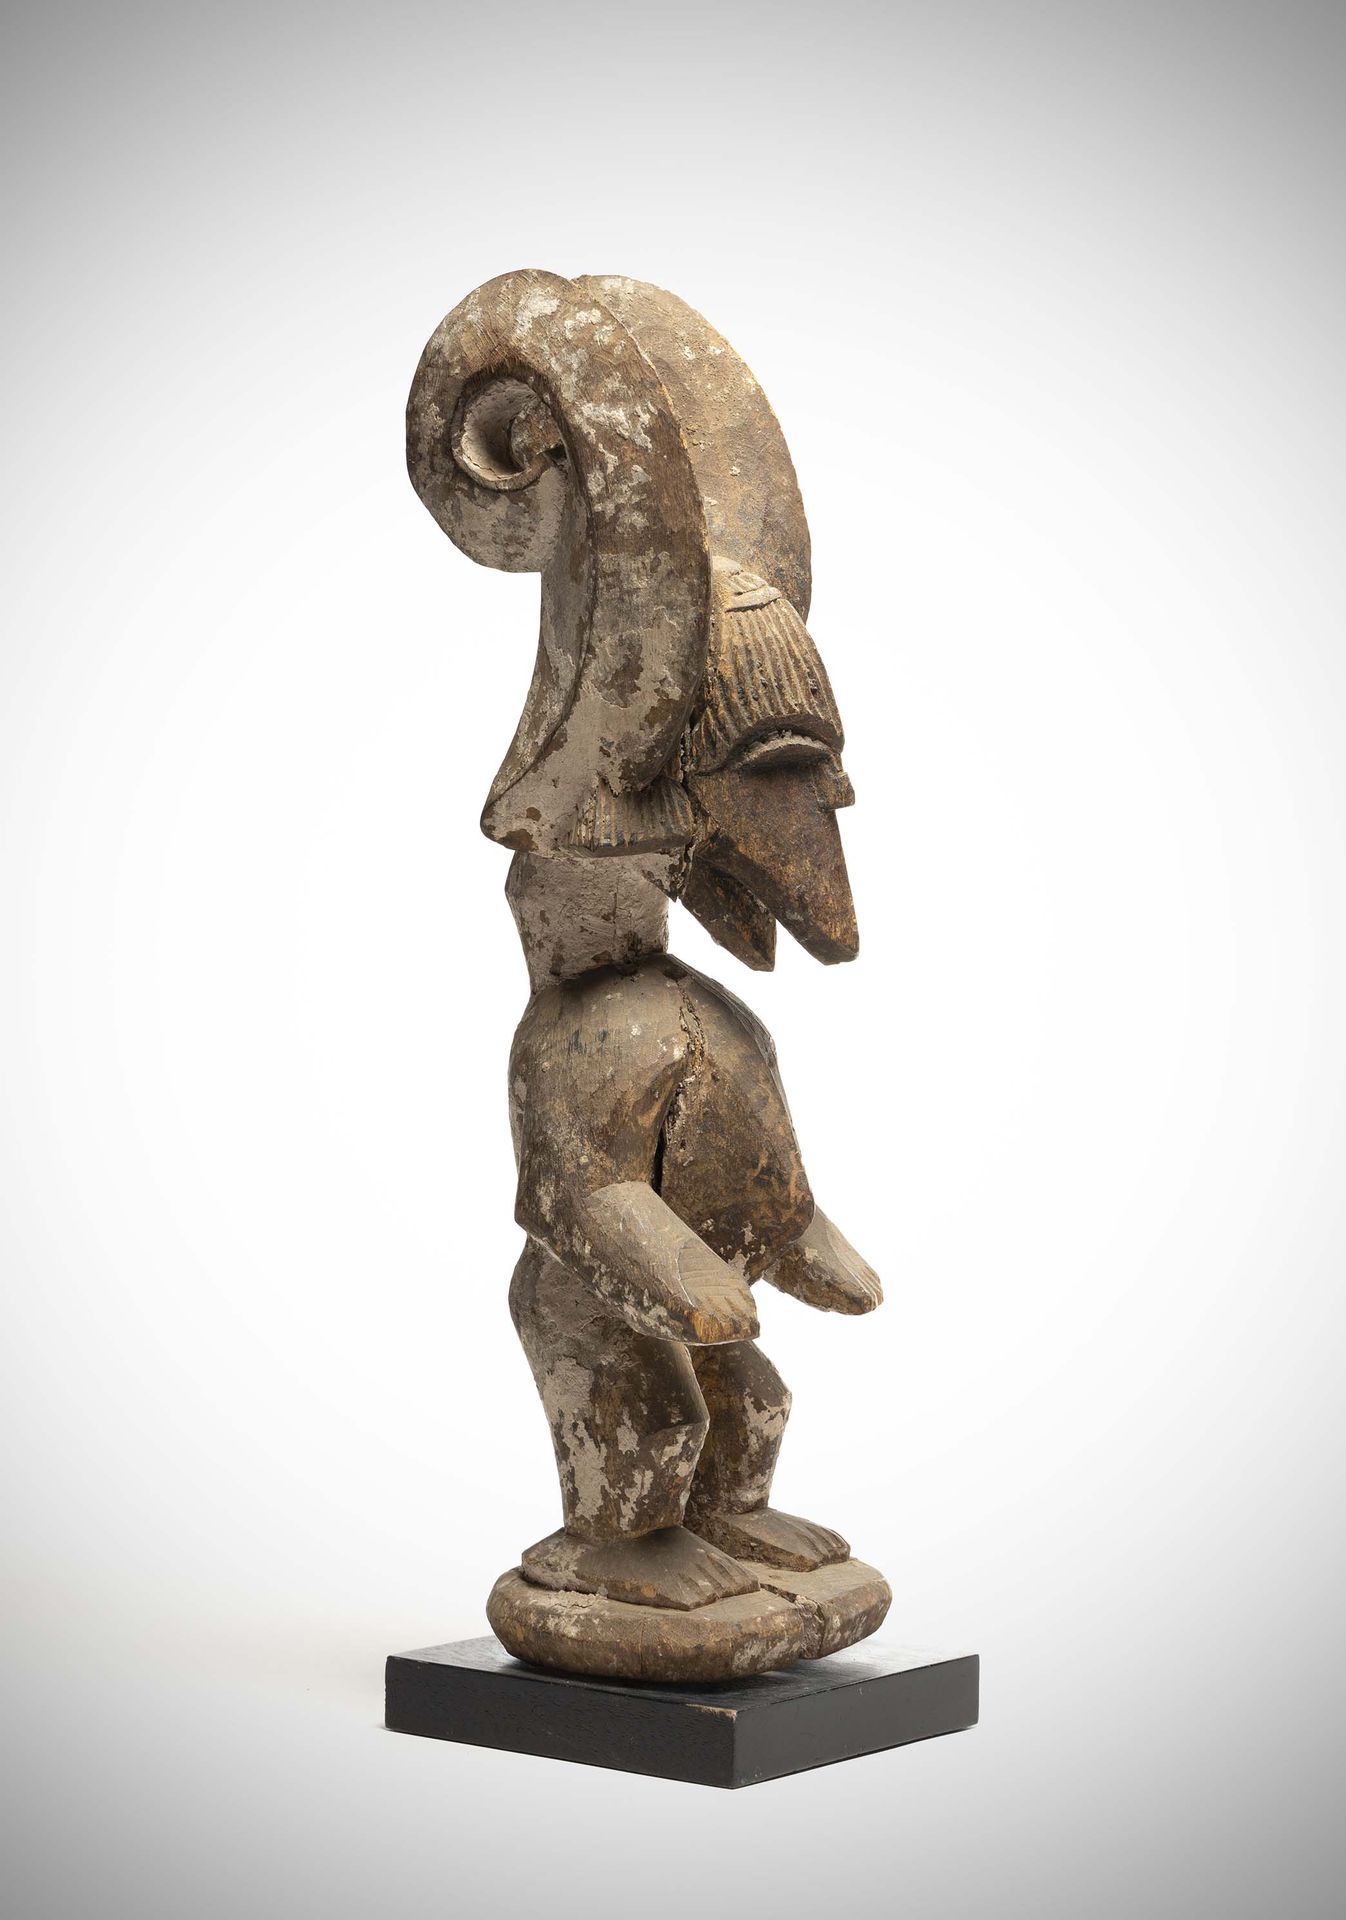 Null Ibo

(Nigeria) Anthropo-zoomorphe Statue des "Ikenga"-Kults, die eine Figur&hellip;